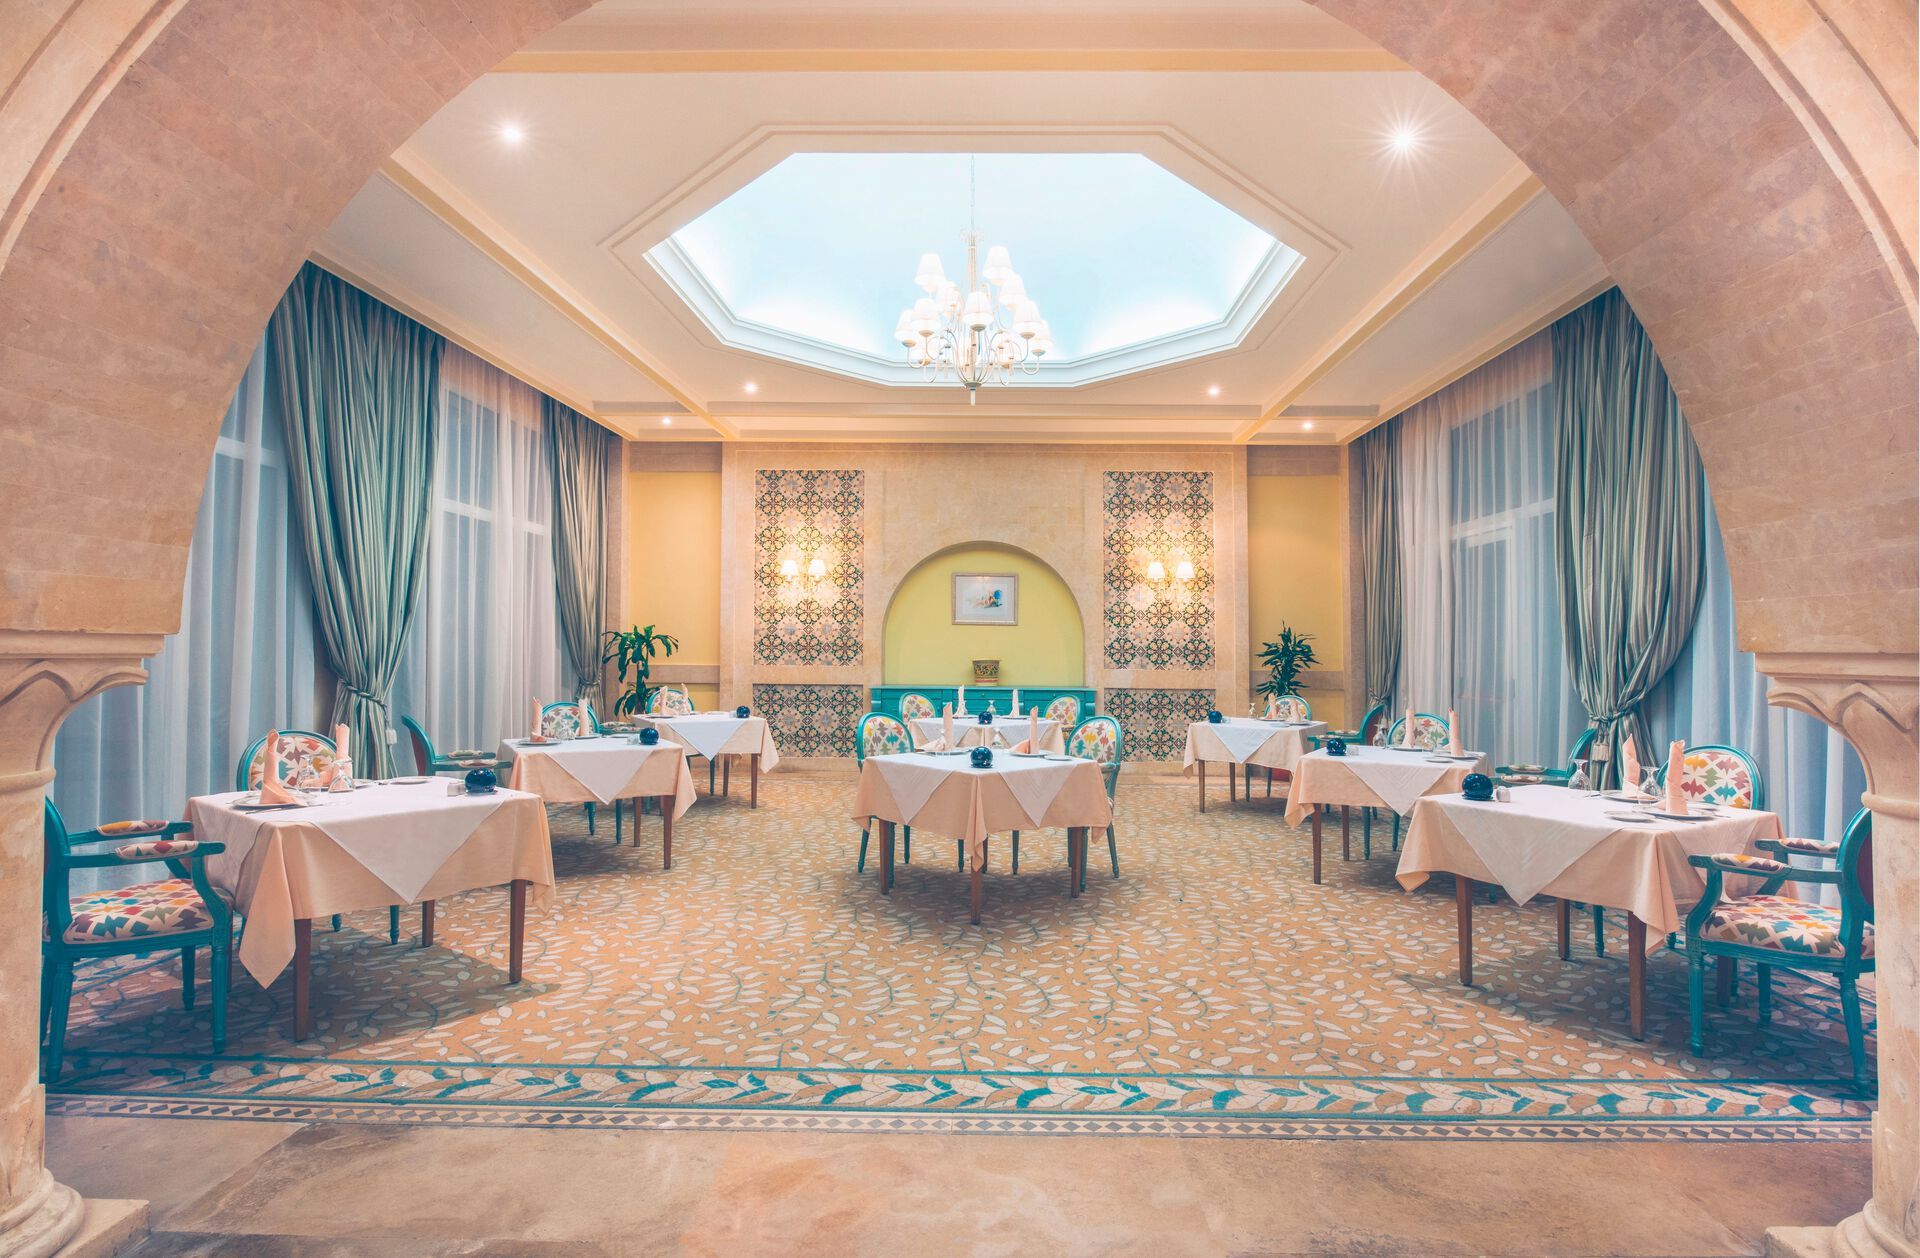 Tunisie - Hammamet - Hôtel Iberostar Averroes 4*